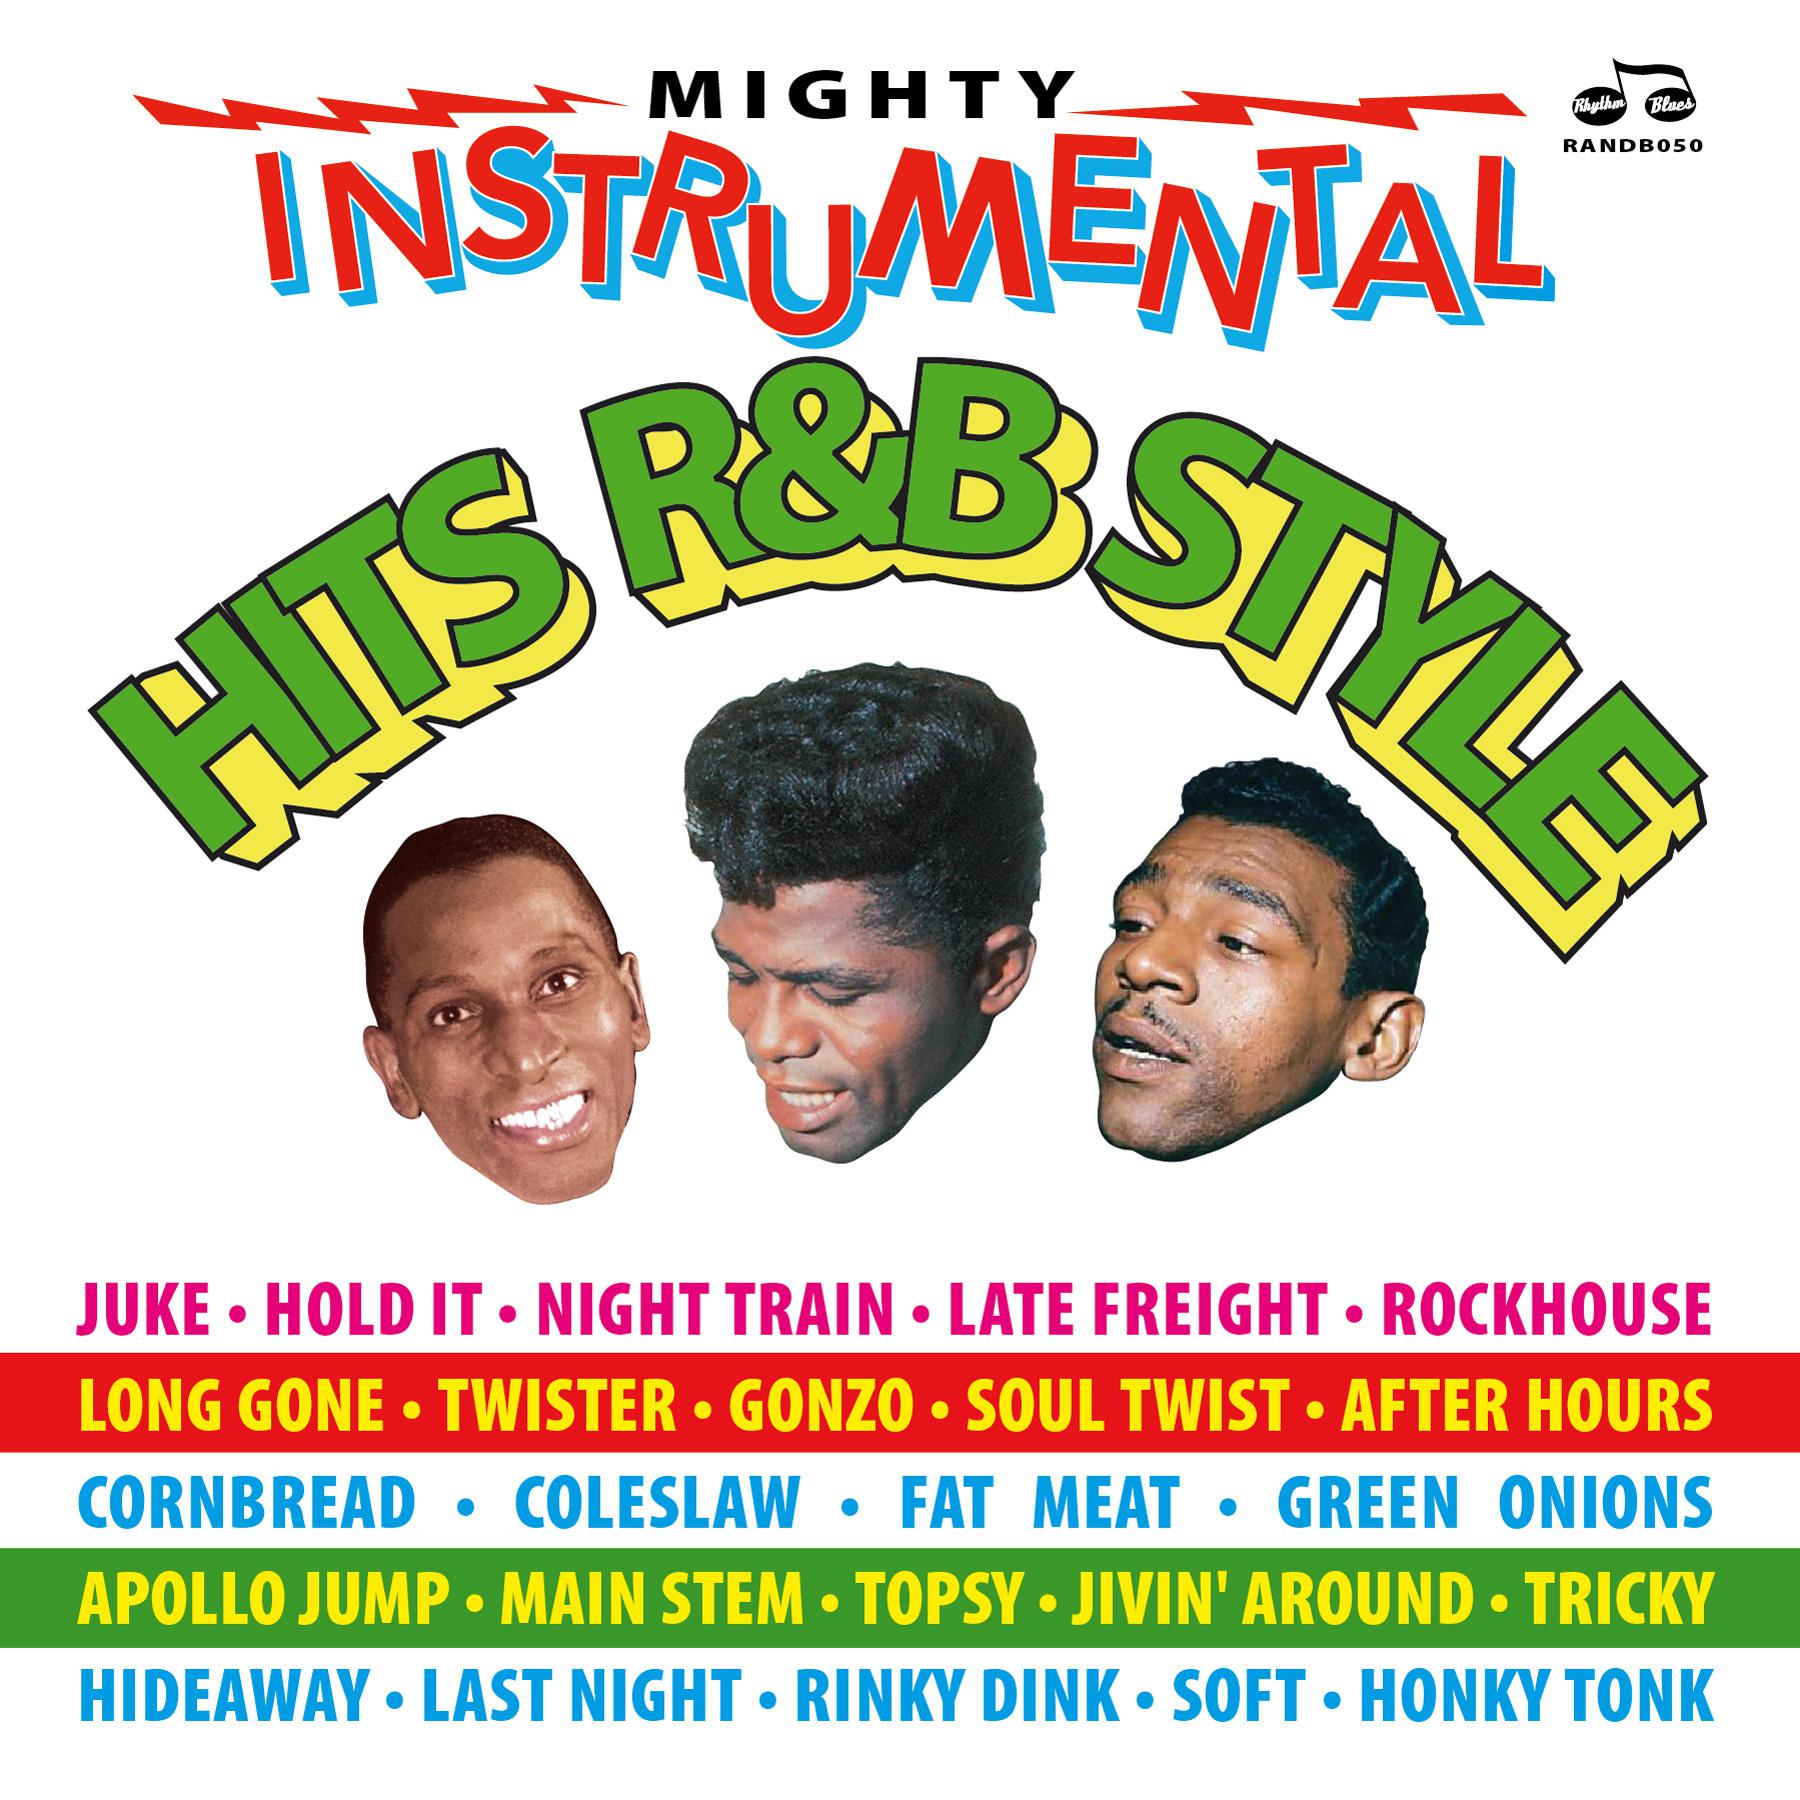 Mighty Instrumental Hits R&B-Style 1942-1953, Vol. 1